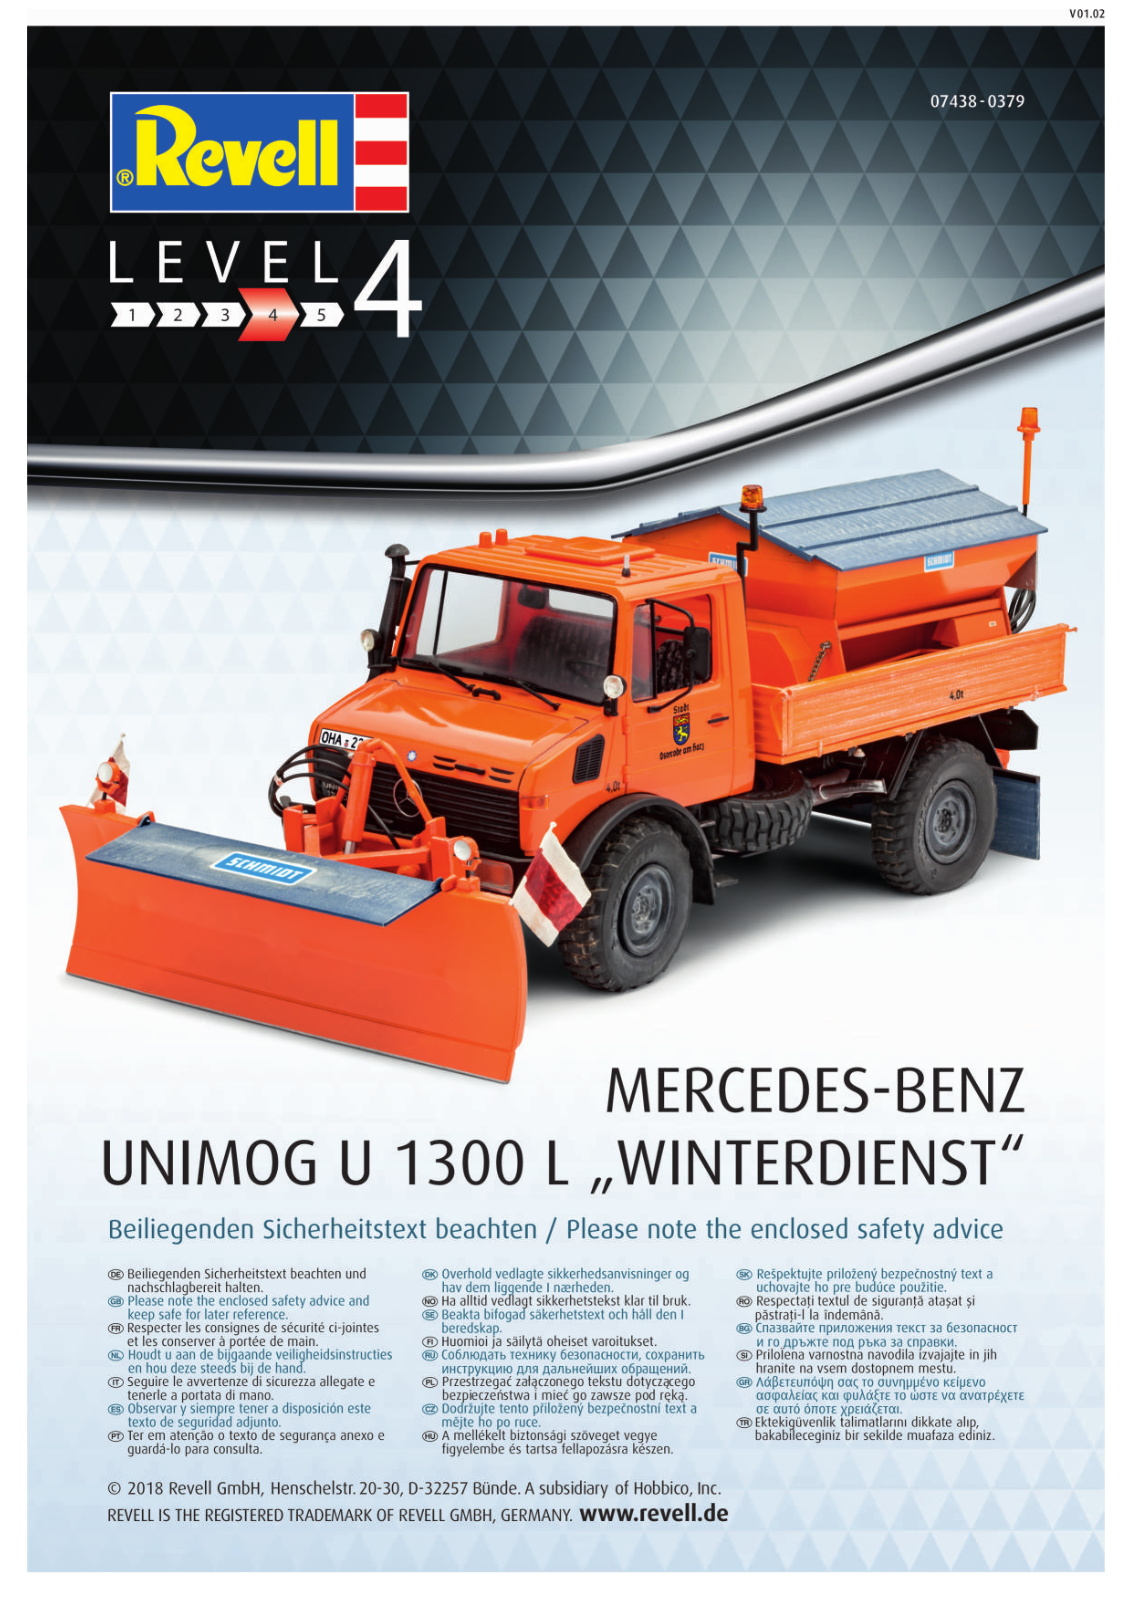 Revell Mercedes-Benz U 1300 L Winterdienst operation manual